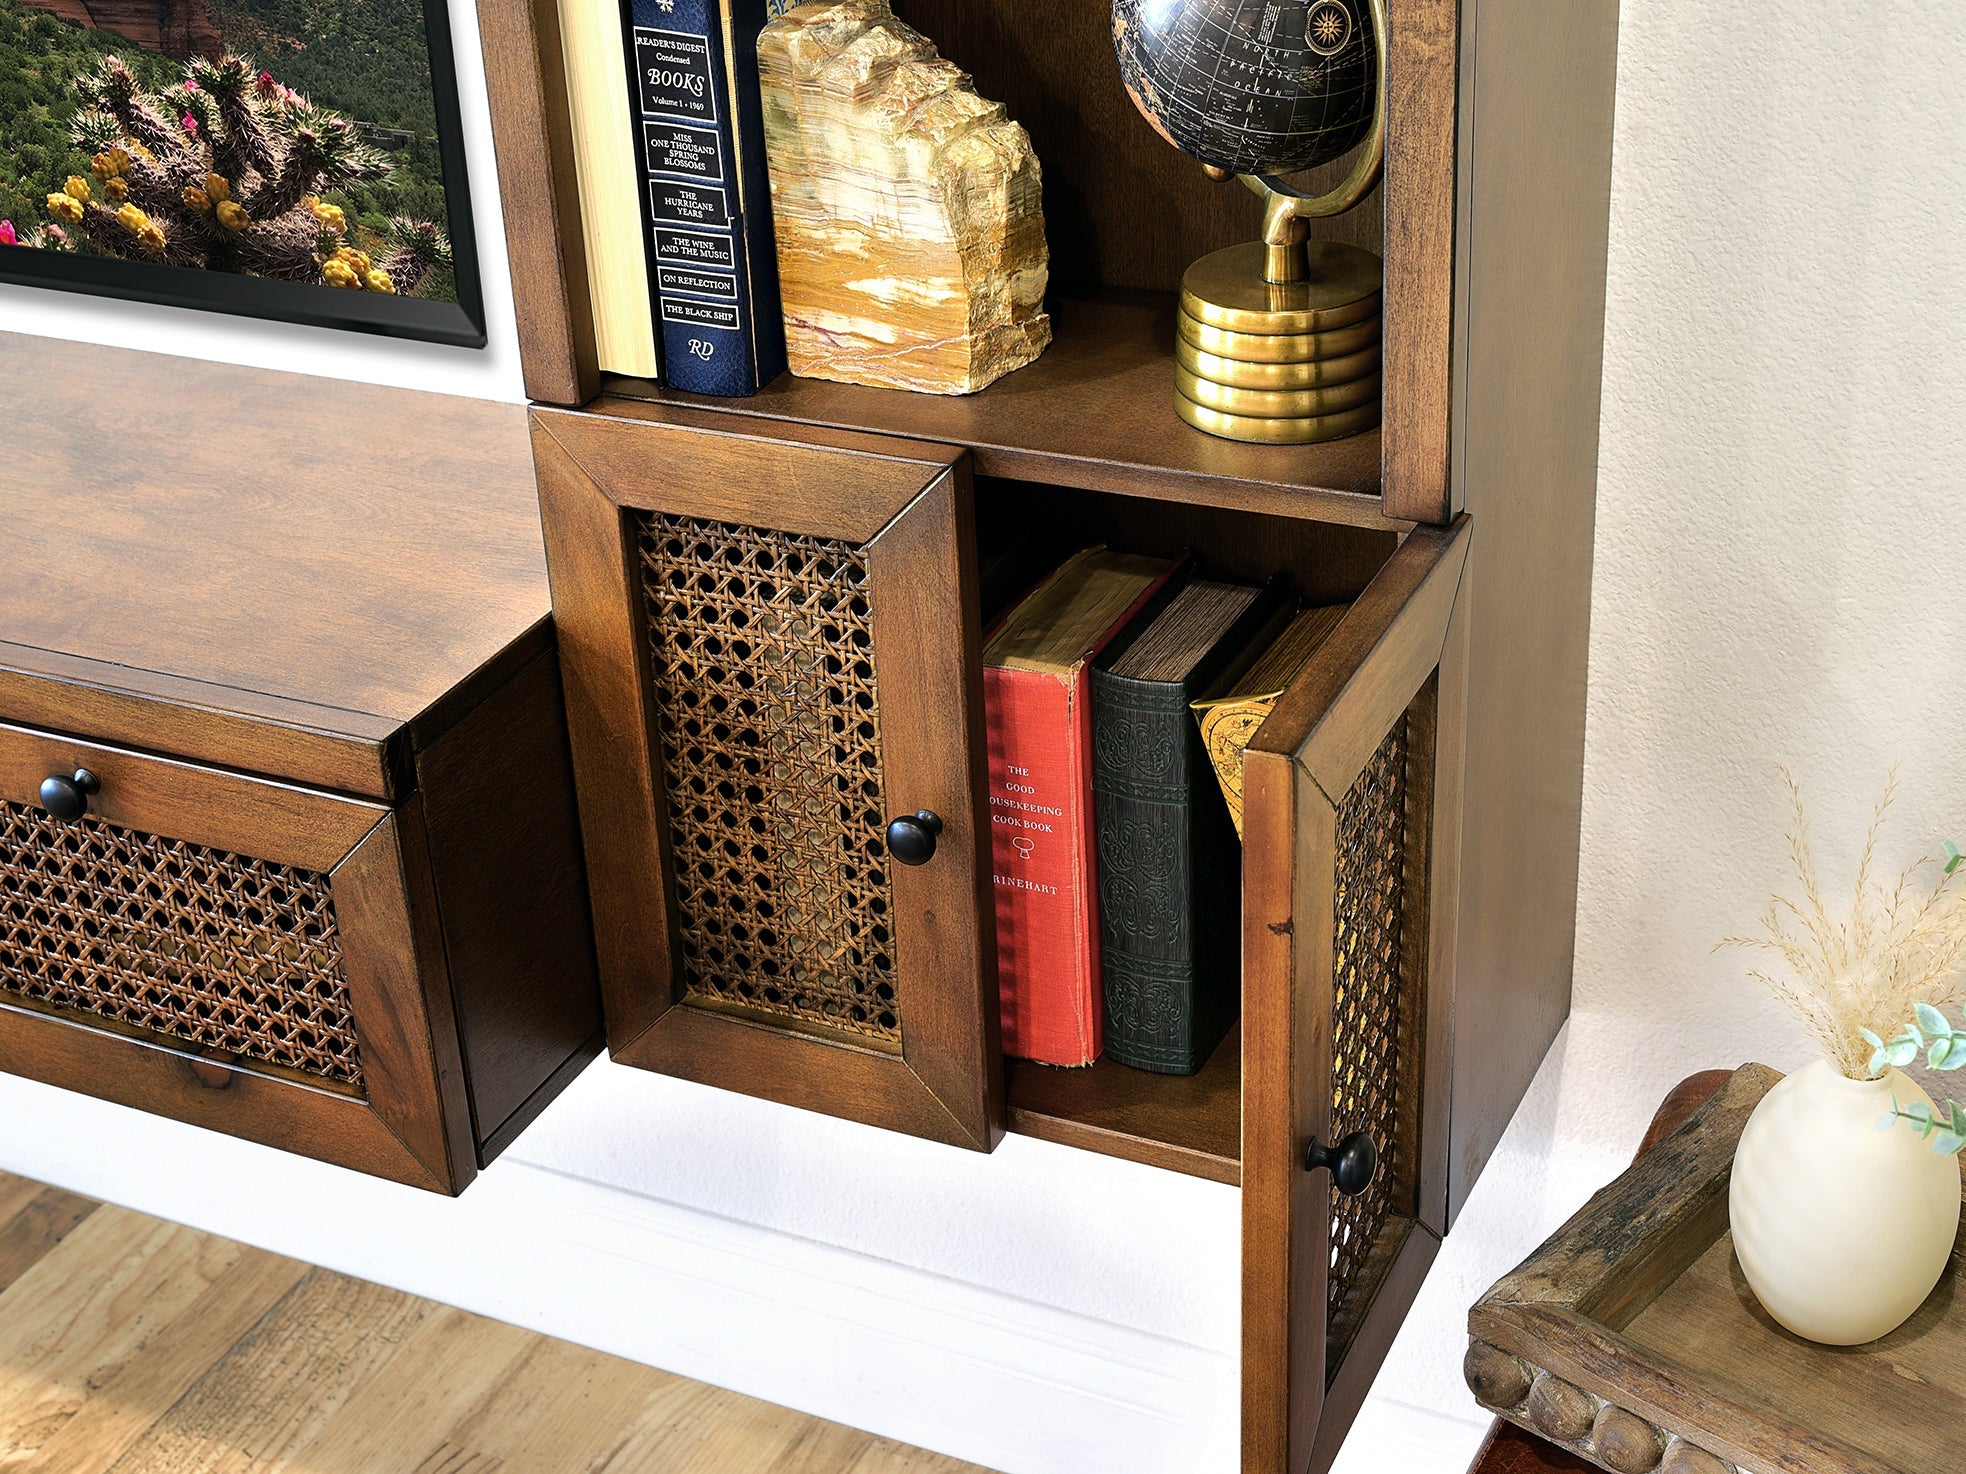 Floating Bookshelf Set - Woodwaves - Wall Mount Boho Cane Storage Bookcases - Sugar Cane Collection - Spice